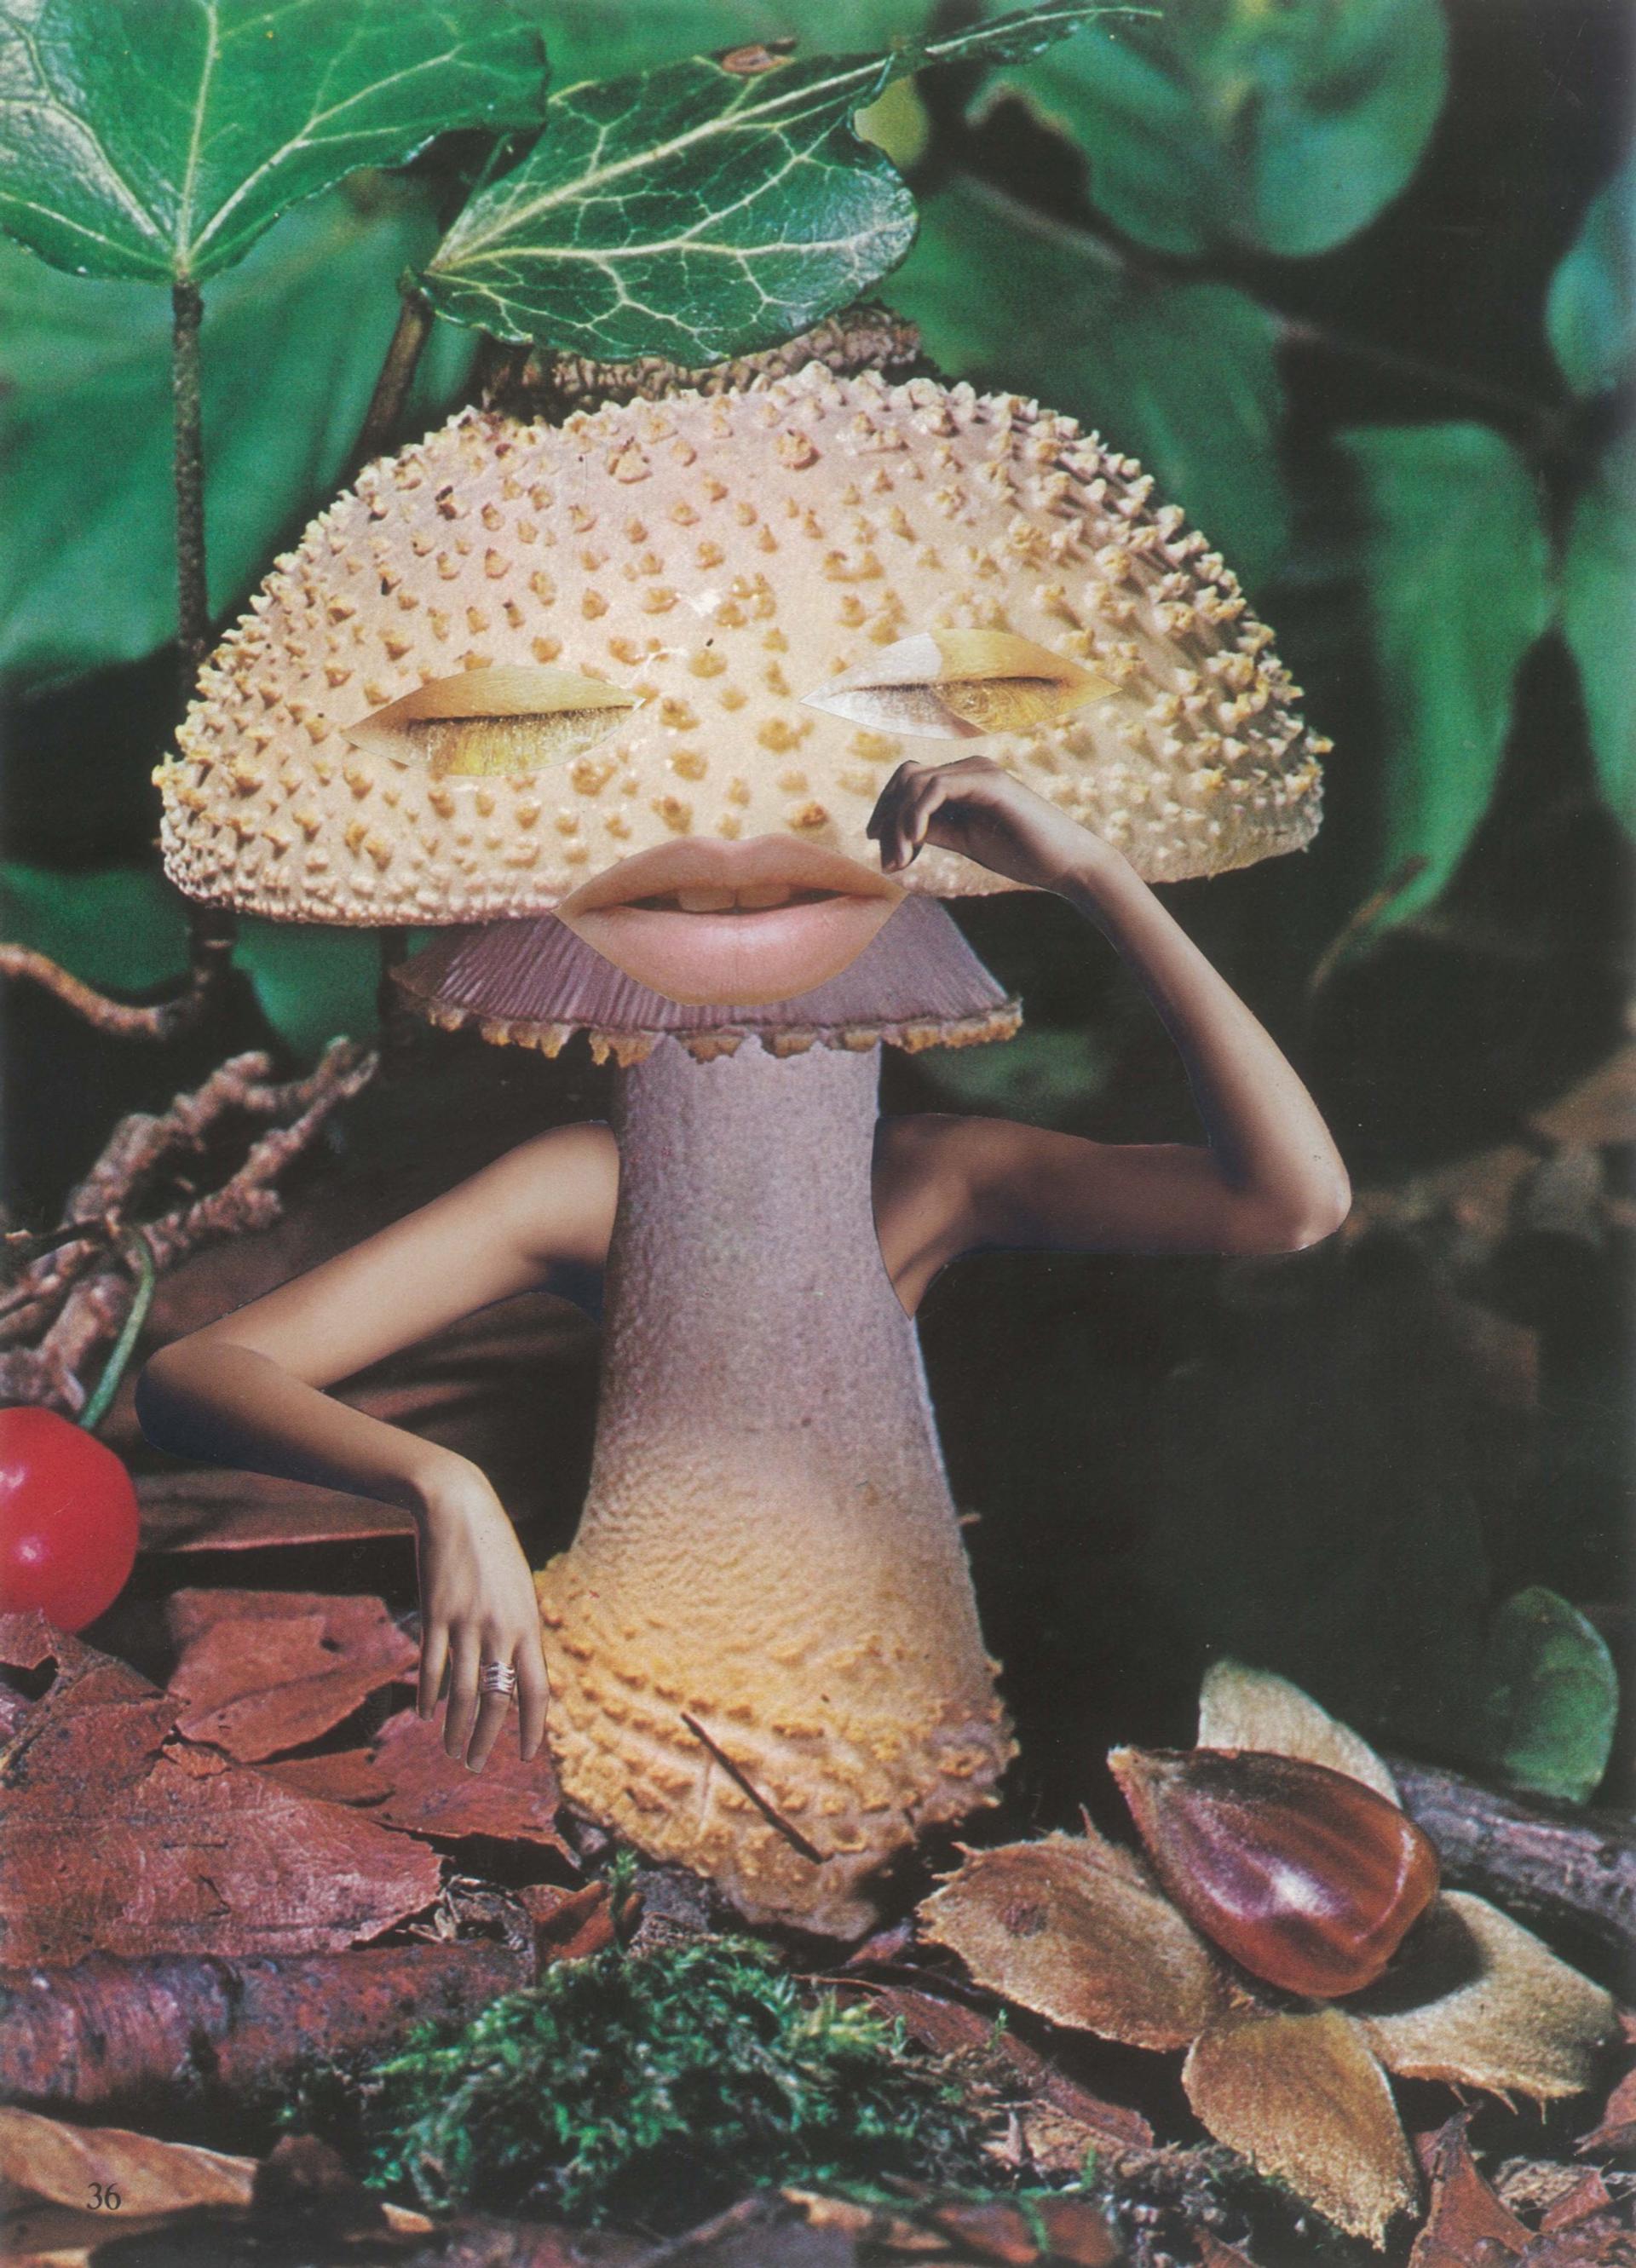 Seana Gavin, "Mindful Mushroom." From